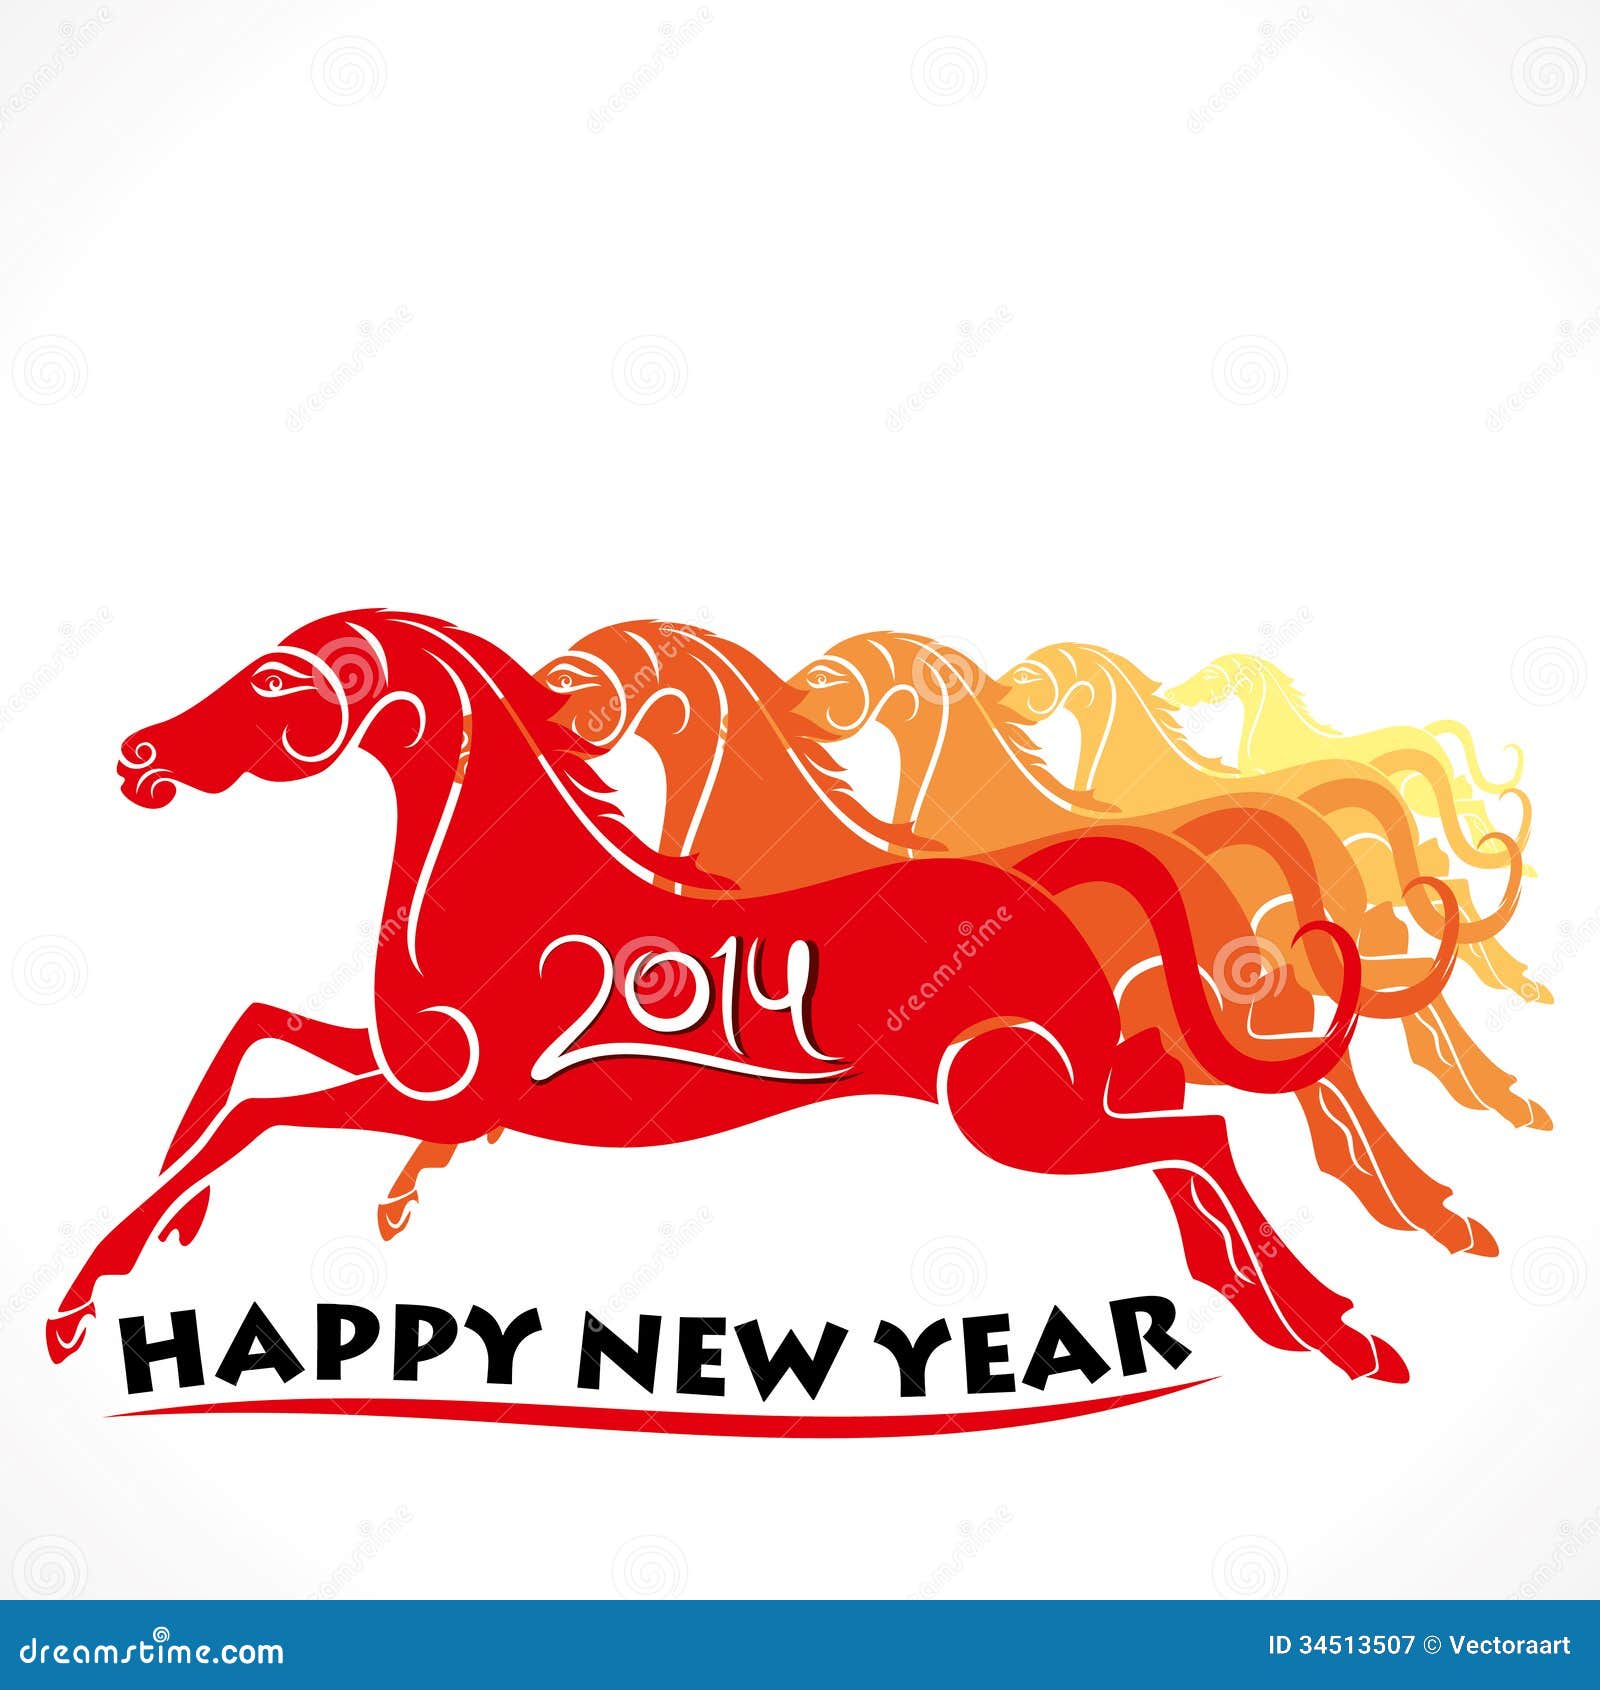 animated clipart happy new year 2014 - photo #30